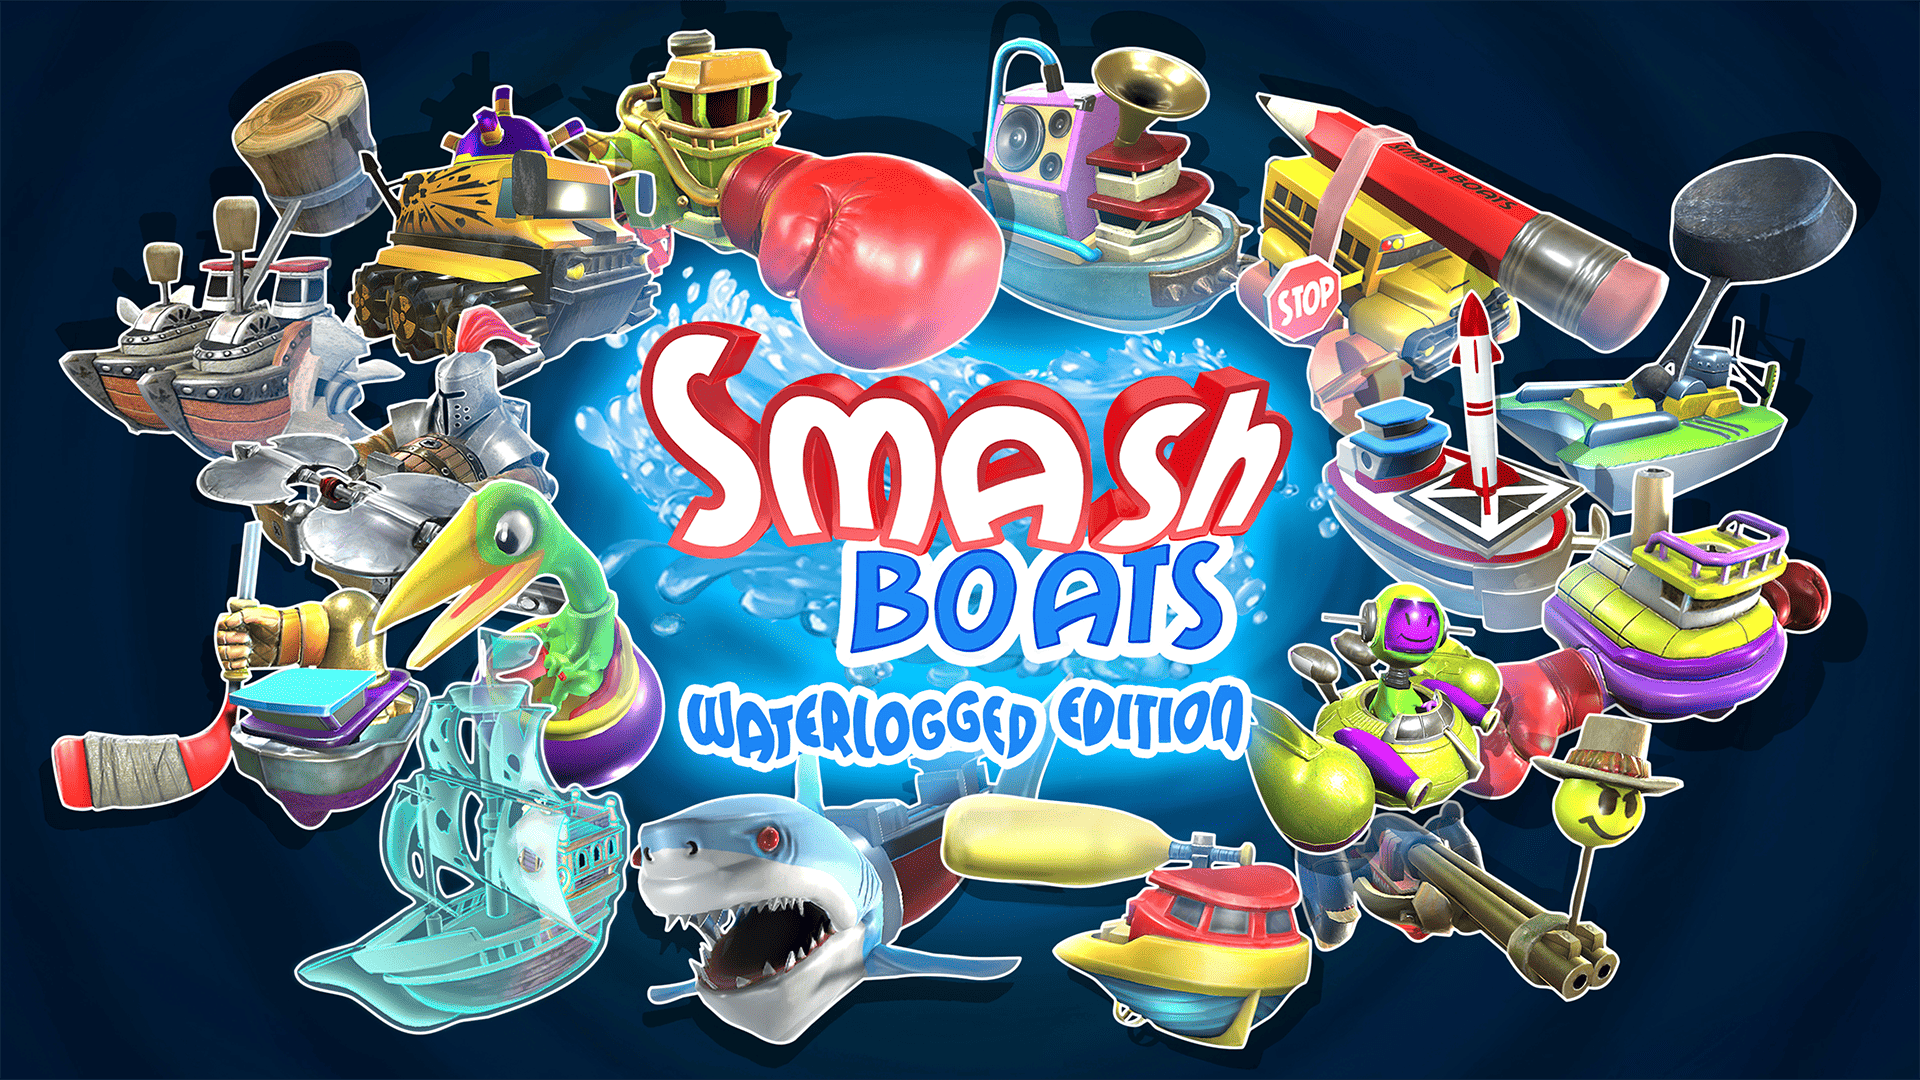 Smash Boats Waterlogged Edition game poster